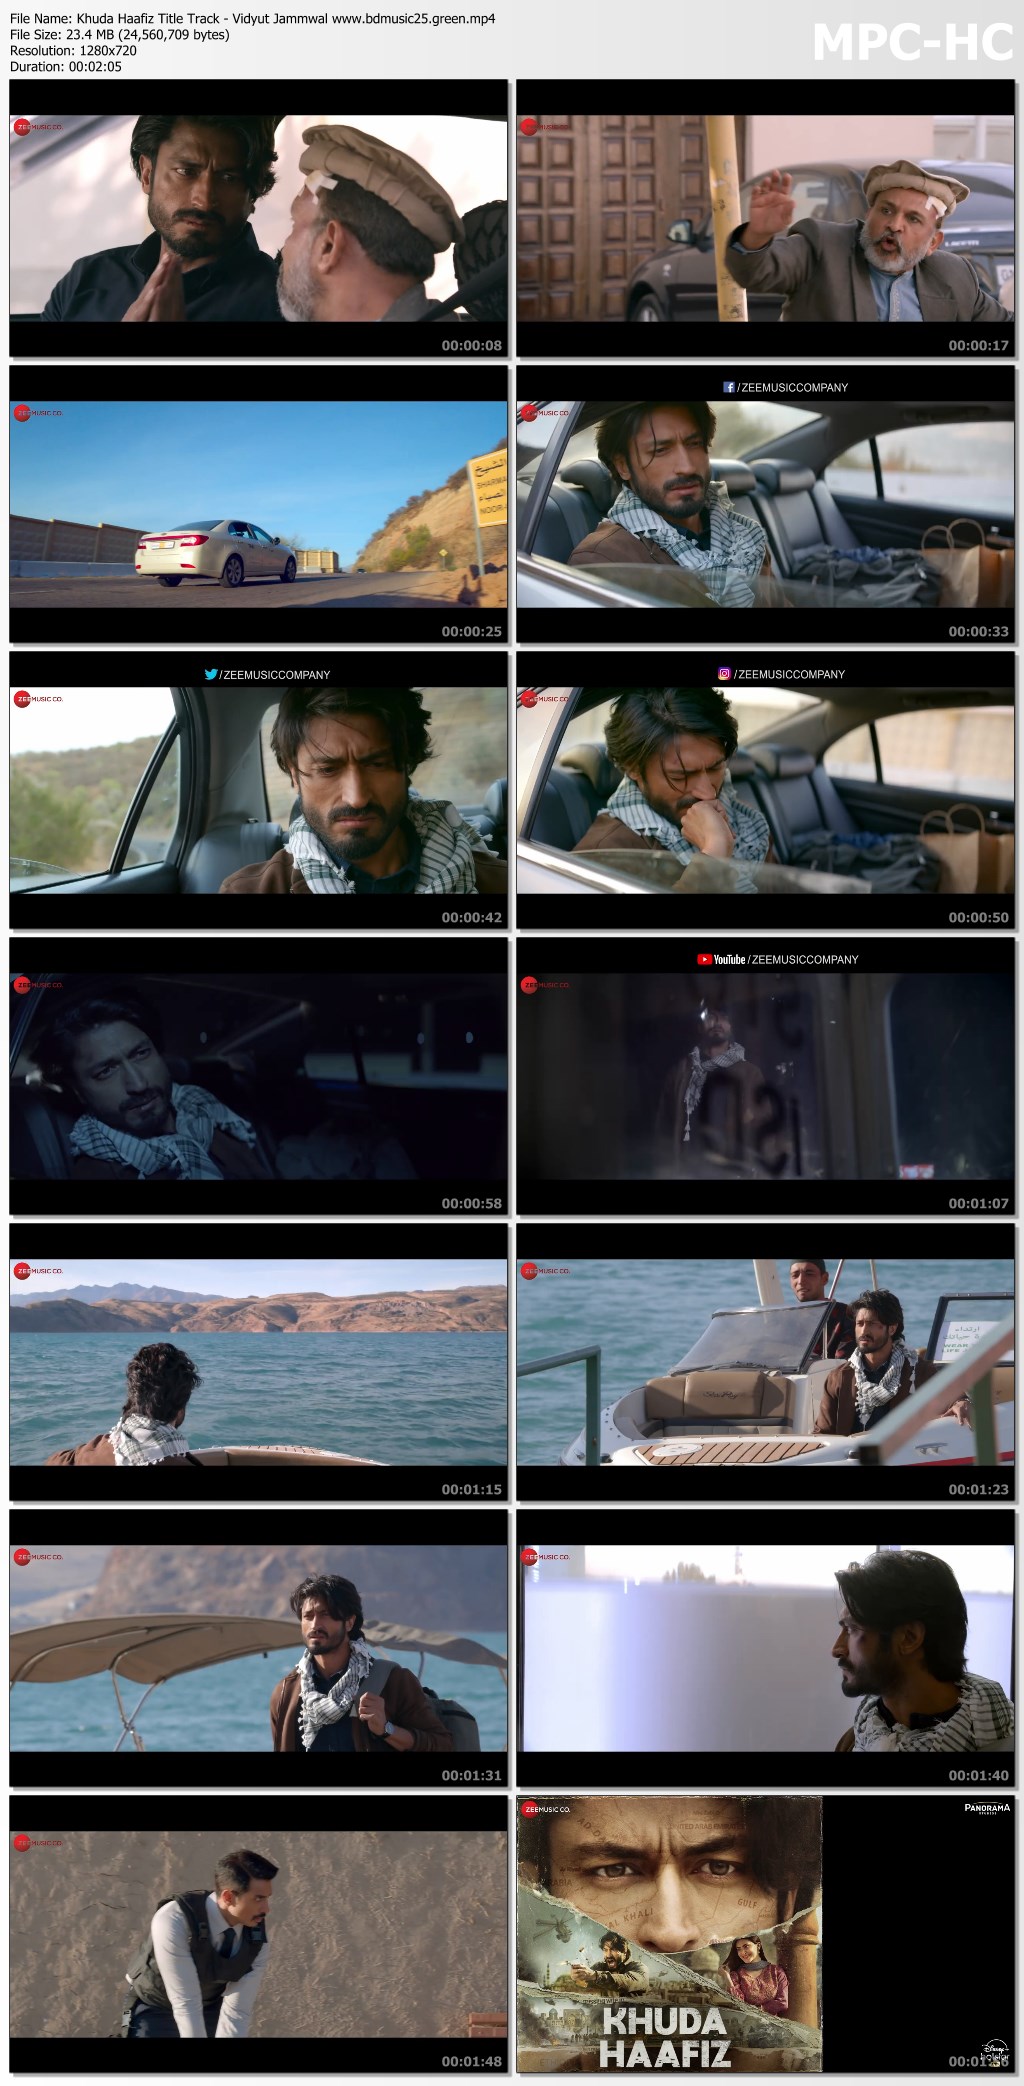 khuda haafiz full movie download google drive